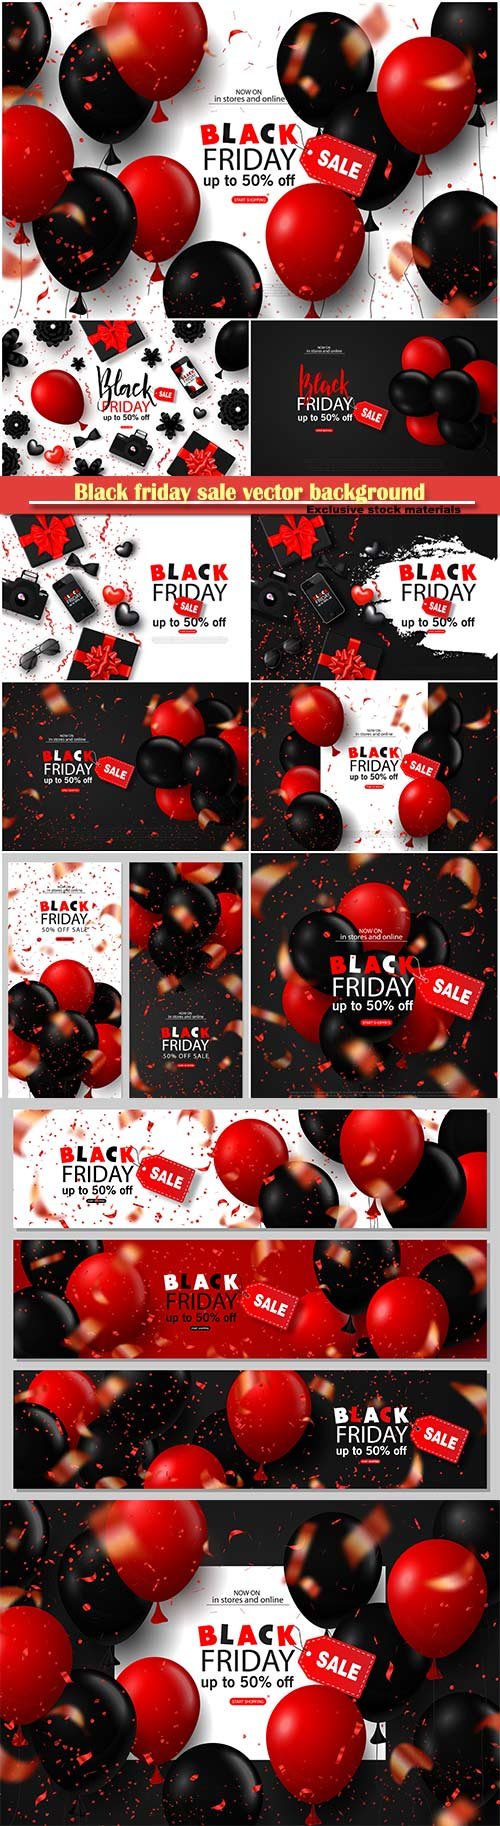 Black friday sale vector background # 3